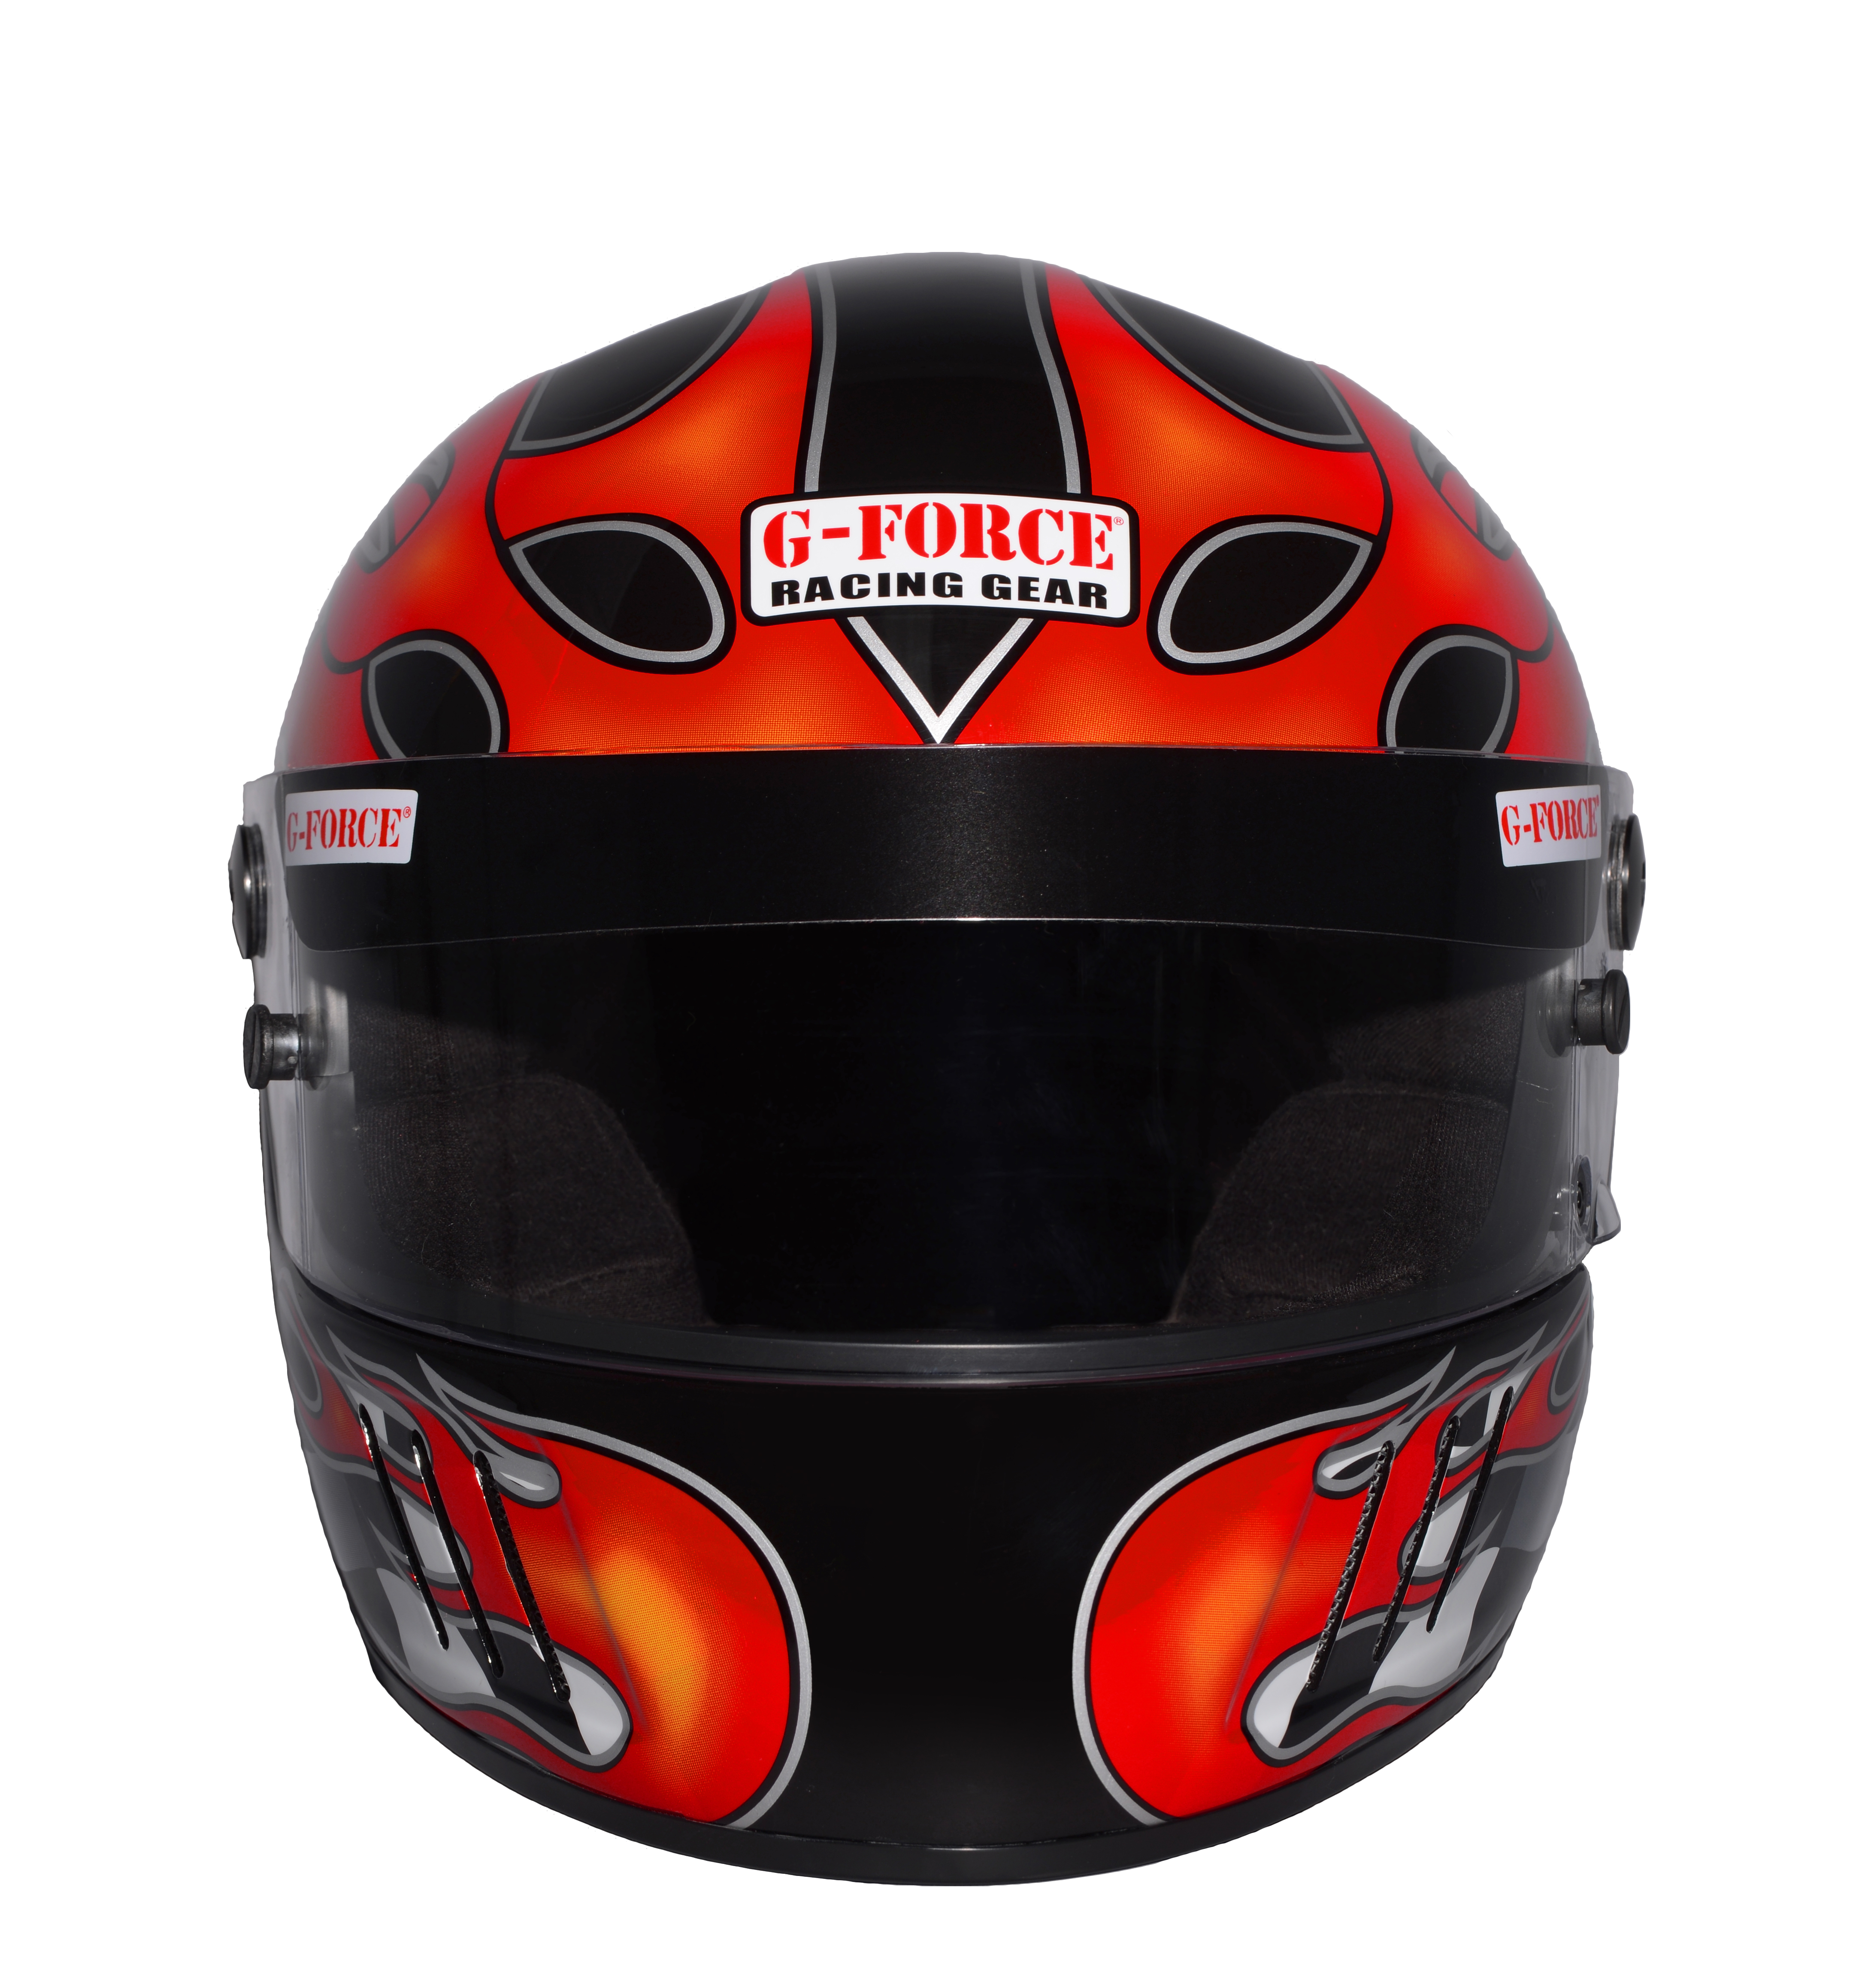 G-Force Racing Gear Helmet, PRO VINTAGE SA2010 FULL FACE X-SMALL BLACK